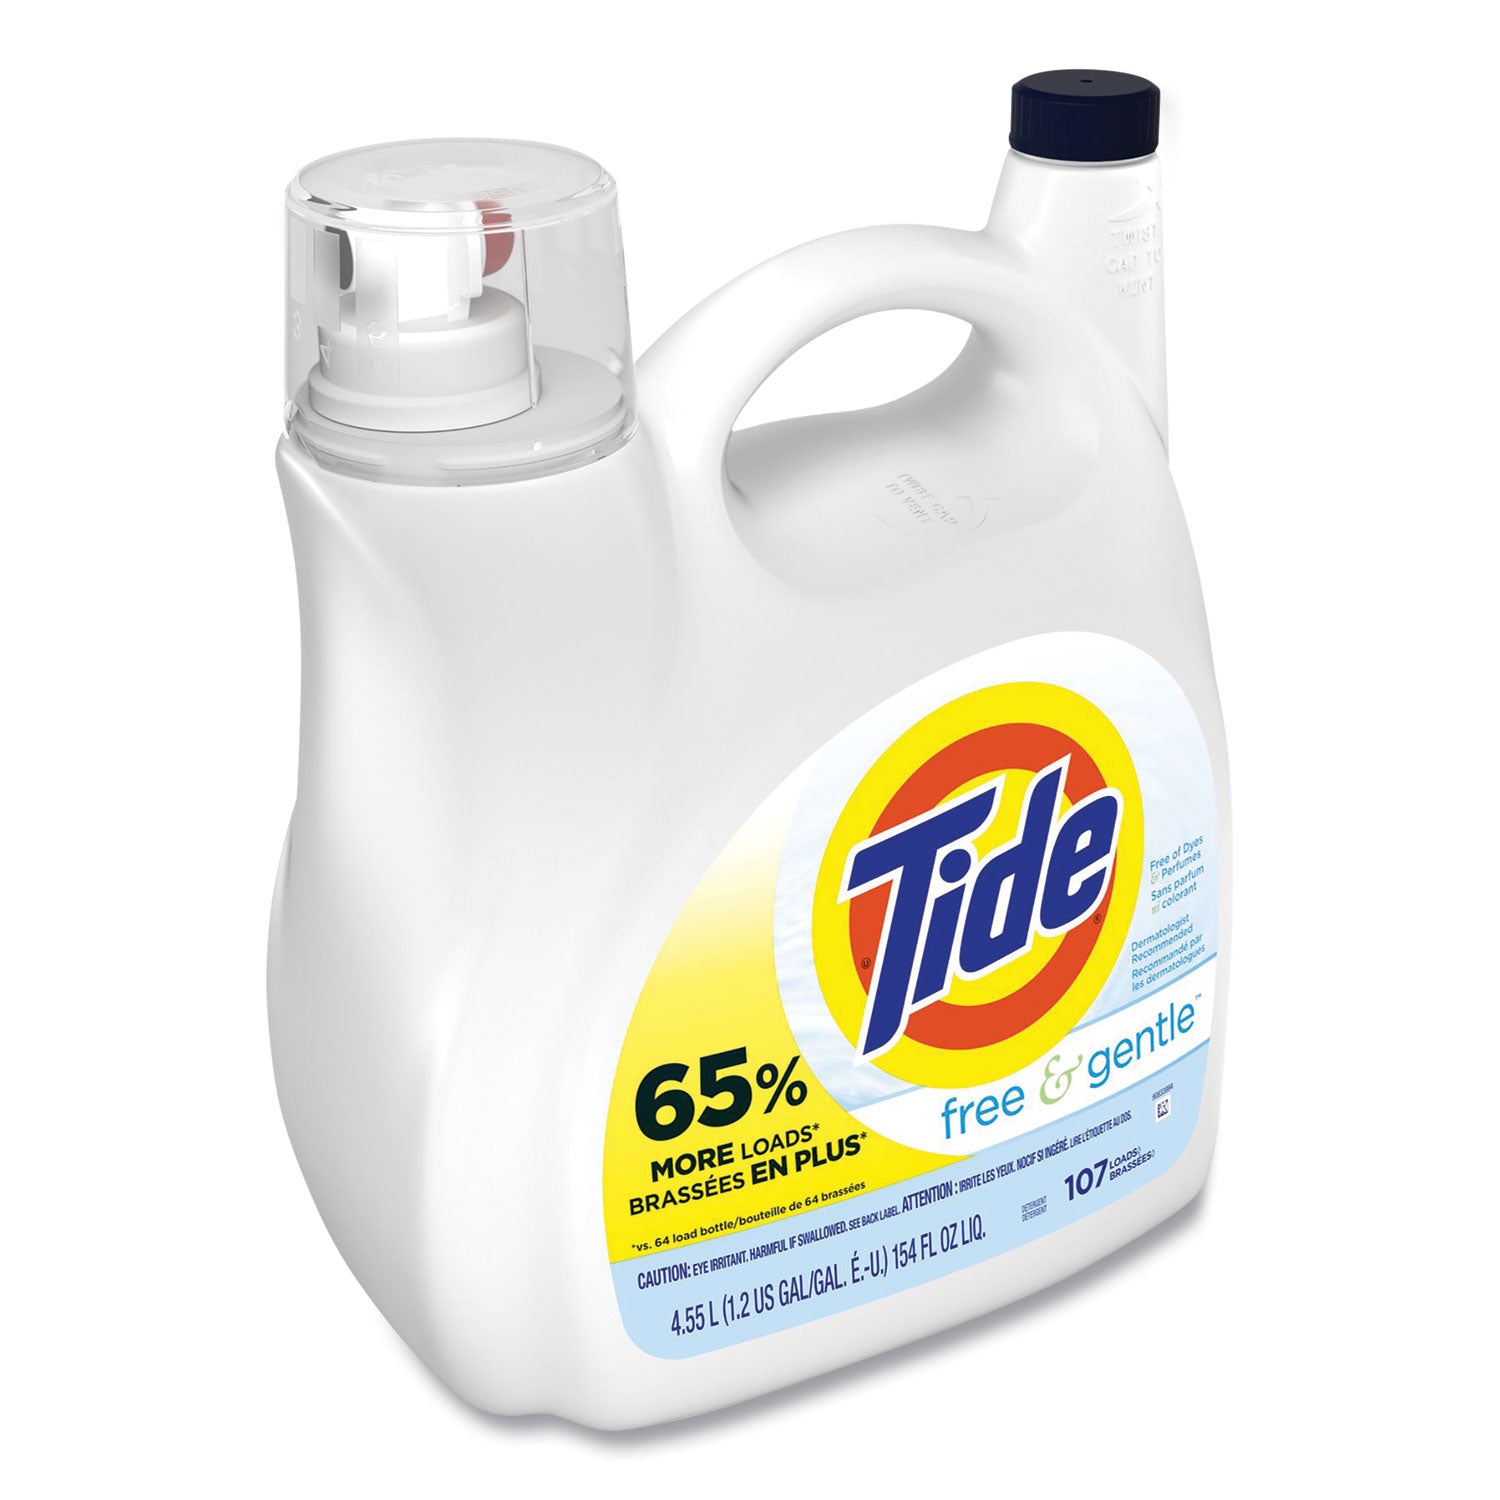 free-and-gentle-liquid-laundry-detergent-107-loads-154-oz-pump-bottle_pgc57471 - 2